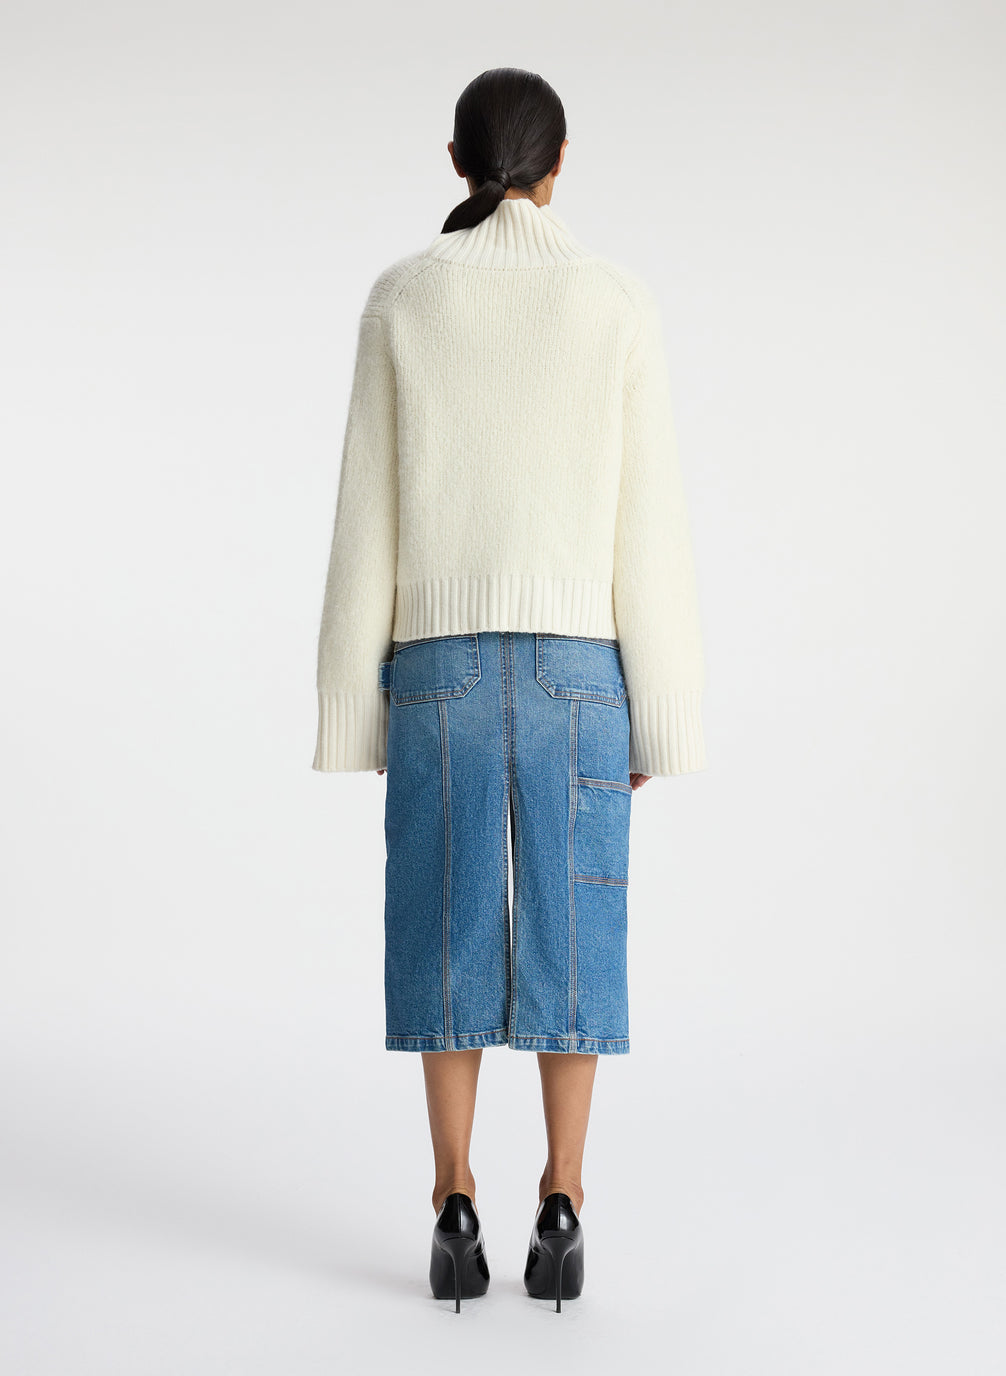 back view of woman wearing ivory sweater and medium blue wash denim midi skirt